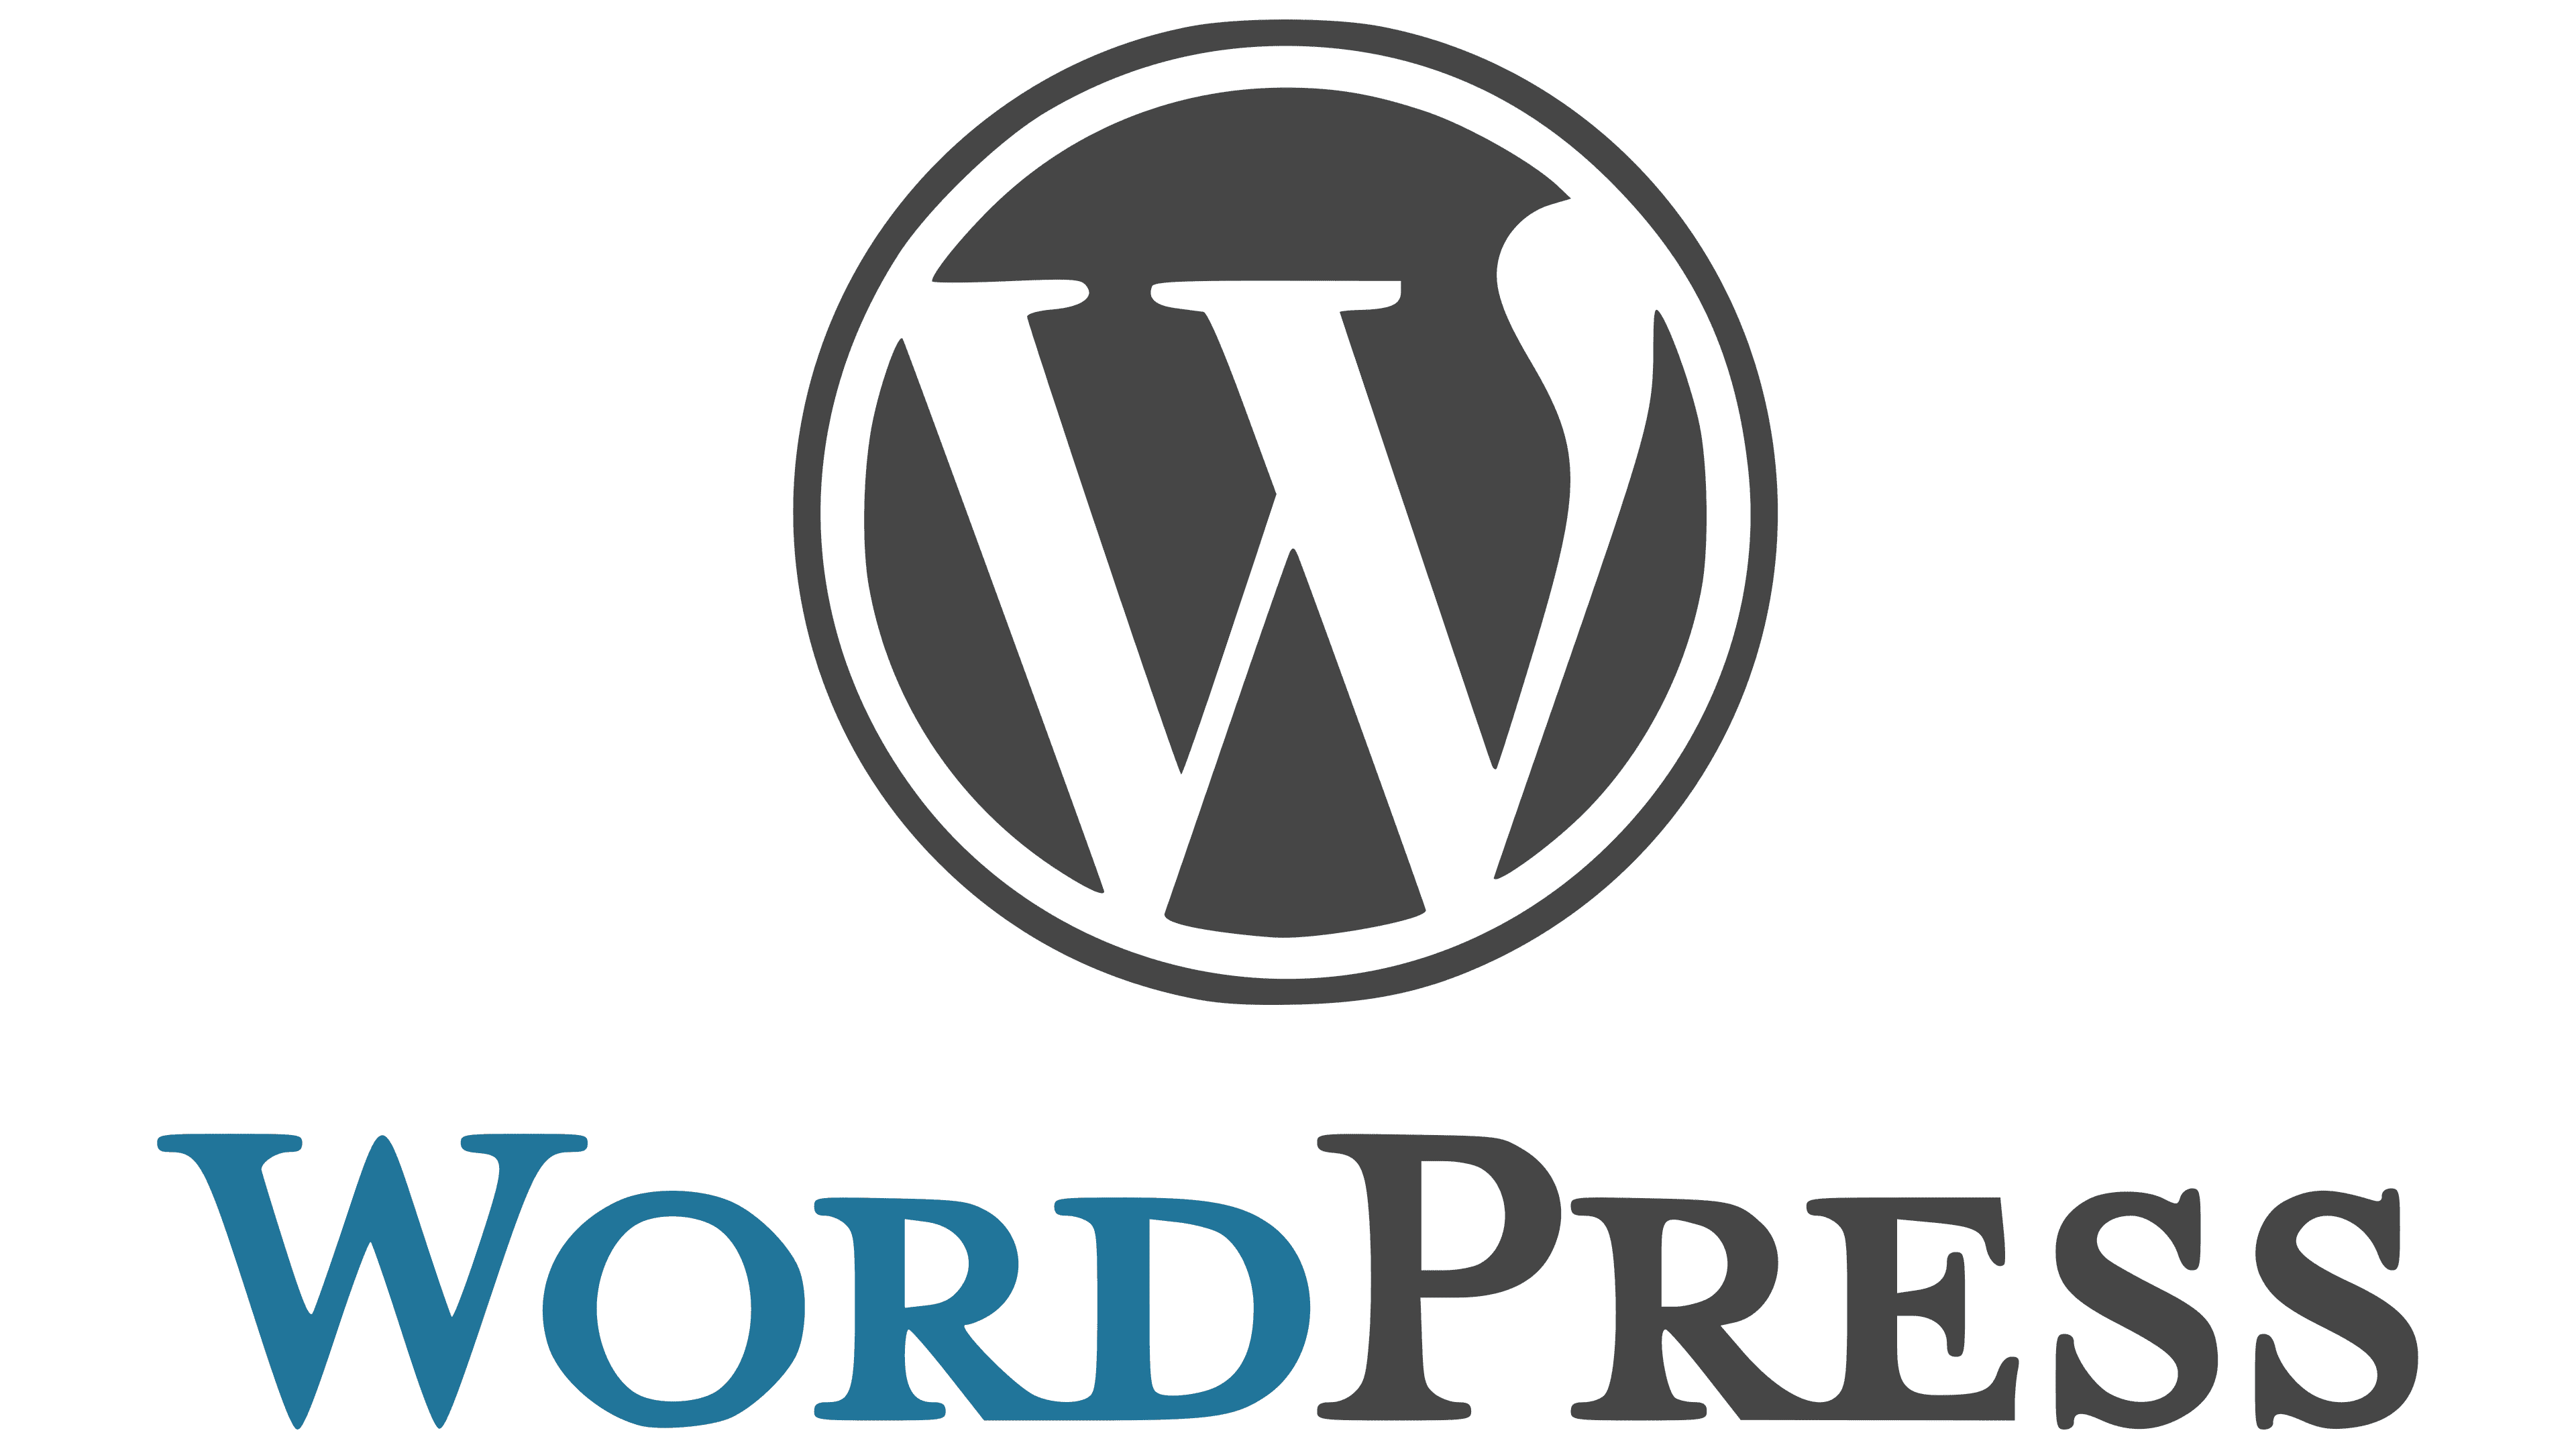 windows wordpress,Web,写作,wordpress,mysql,php,nginx,apache,博客,web application